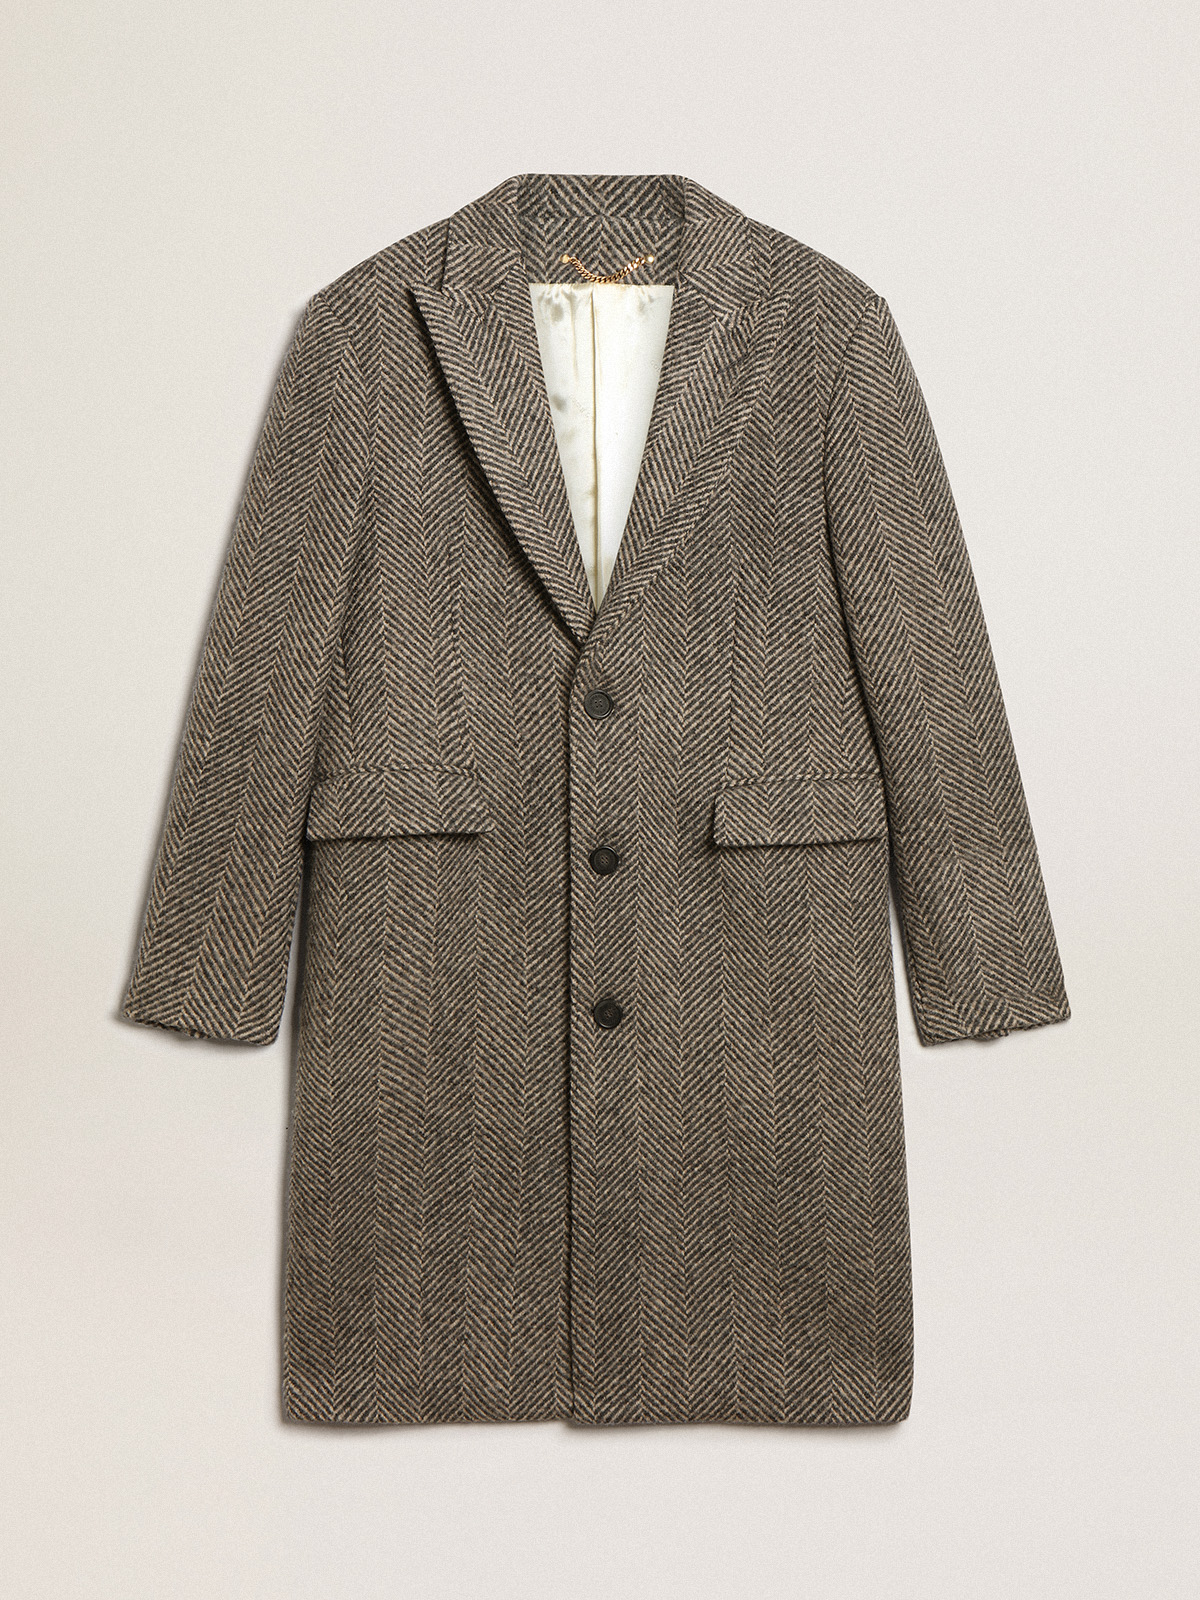 Men's single-breasted wool coat with beige and gray herringbone